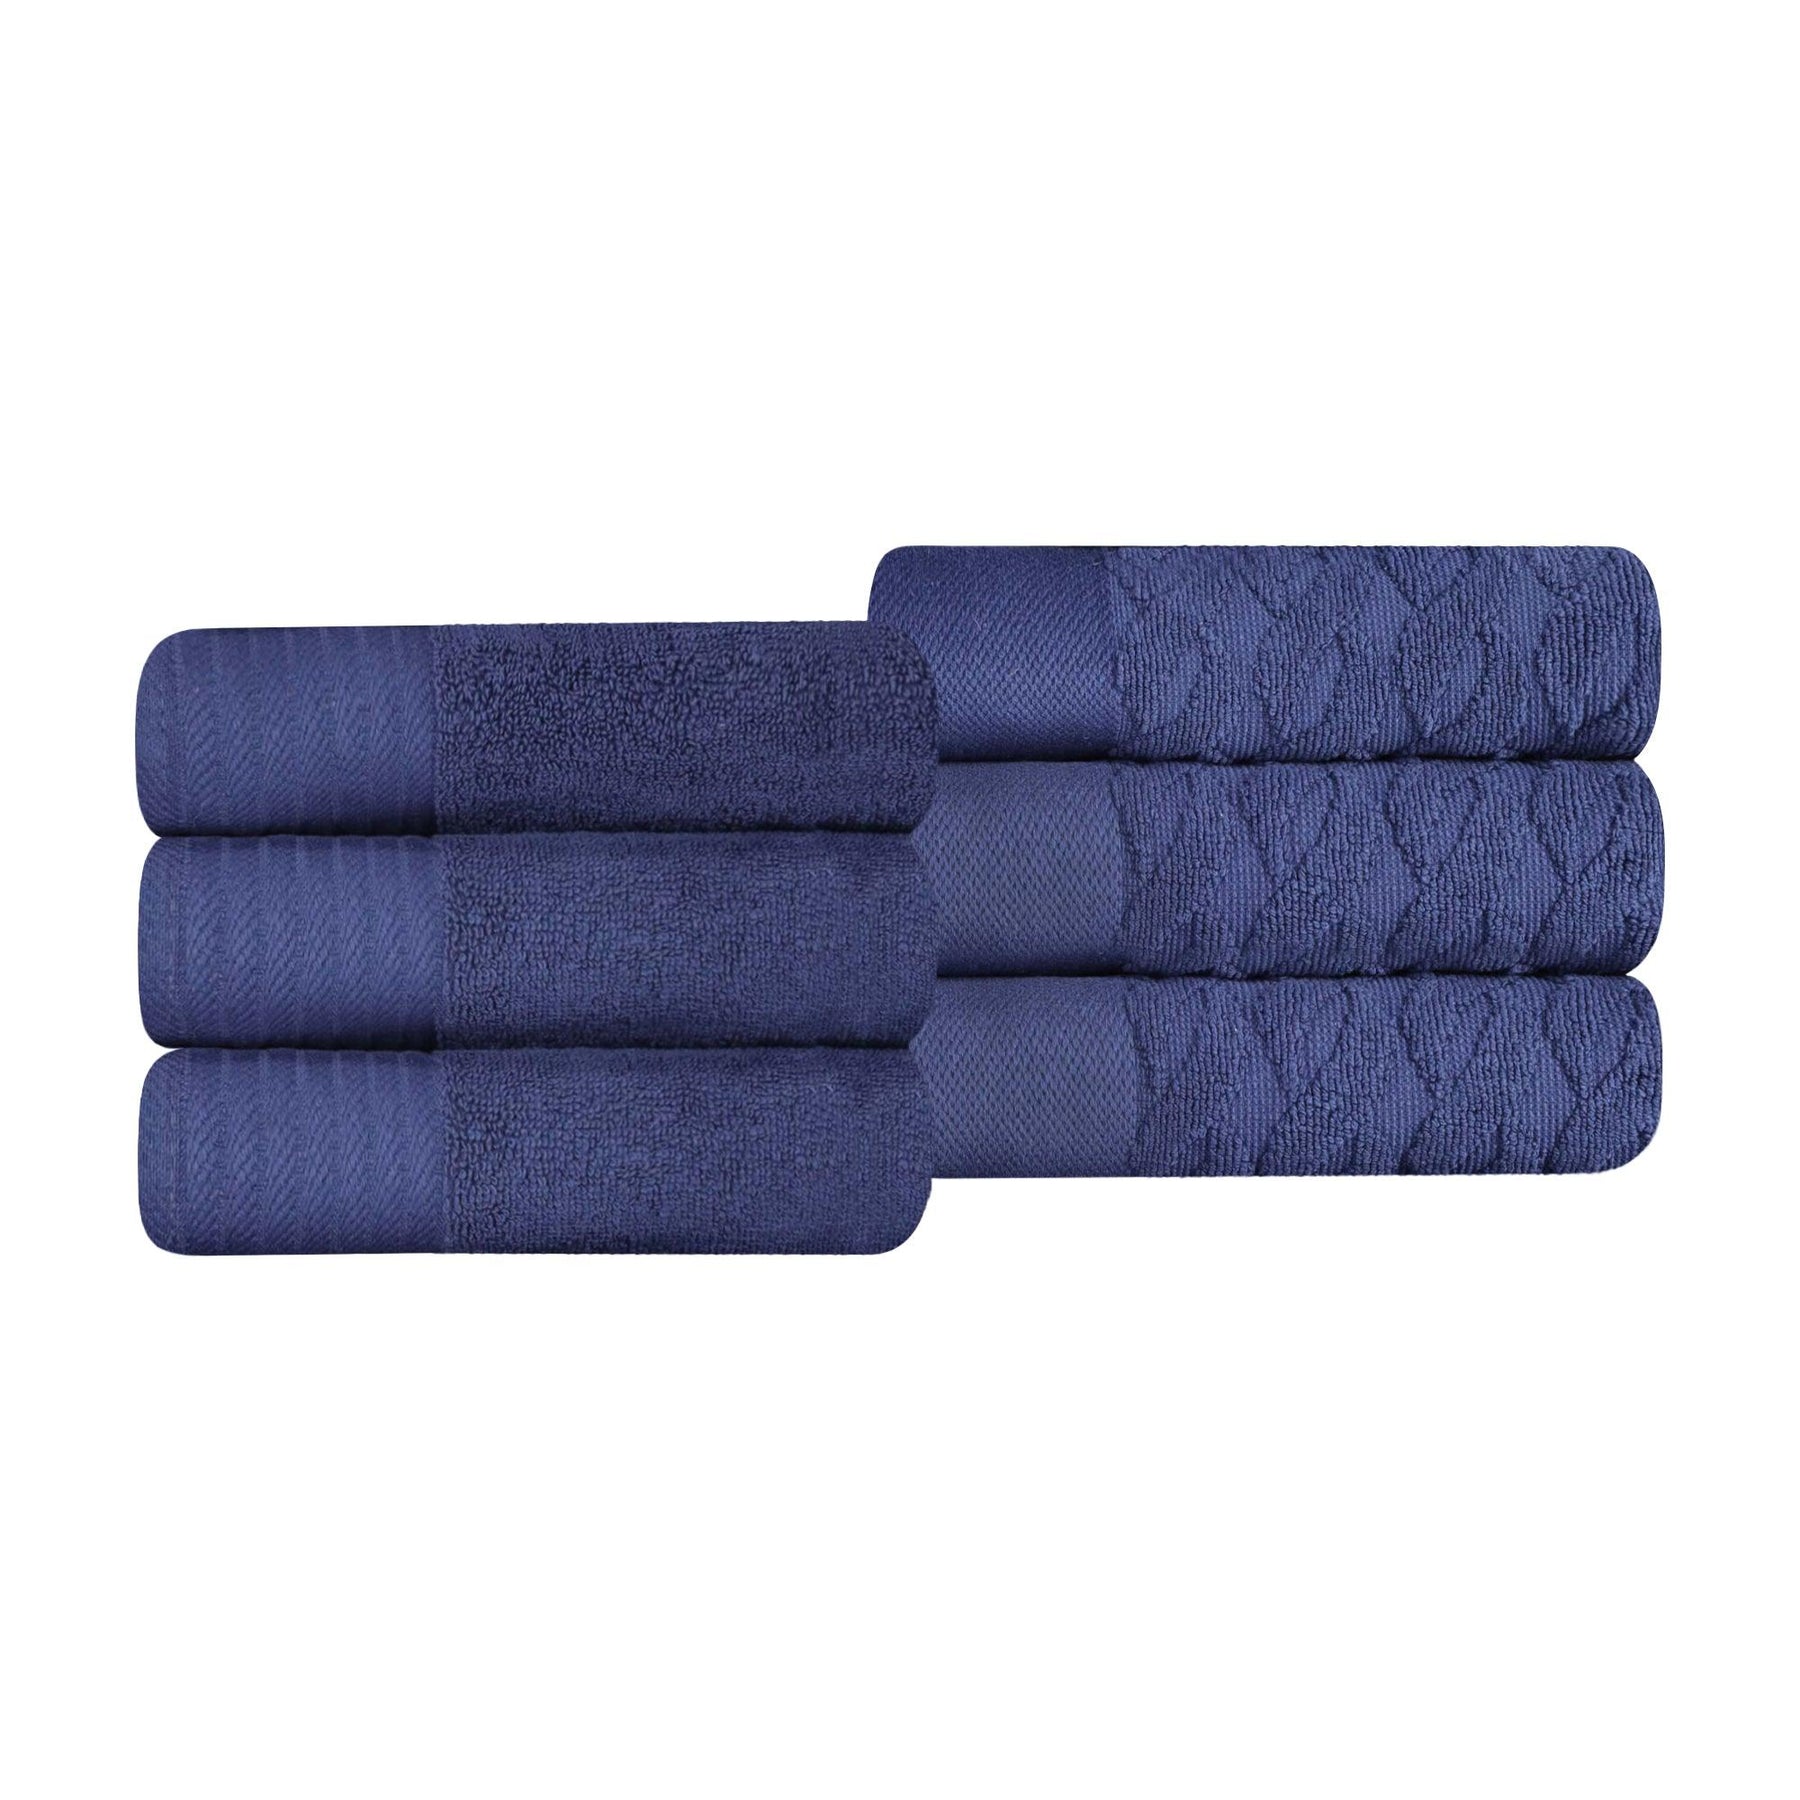 Premium Turkish Cotton Jacquard Herringbone and Solid 6-Piece Hand Towel Set - Navy Blue